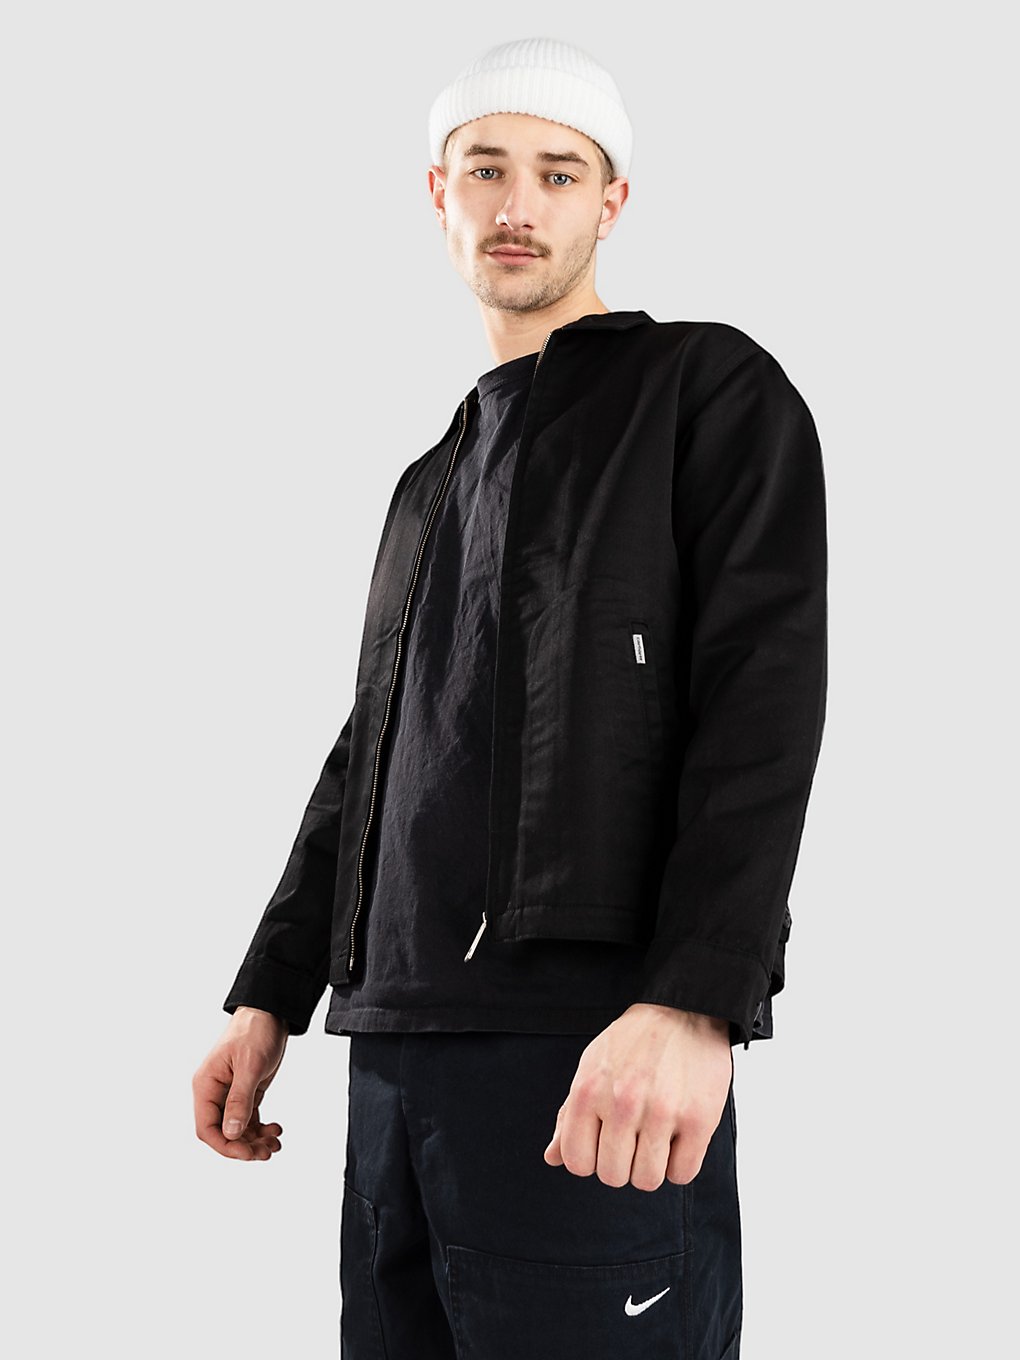 Carhartt WIP Modular Jacke rinsed black kaufen